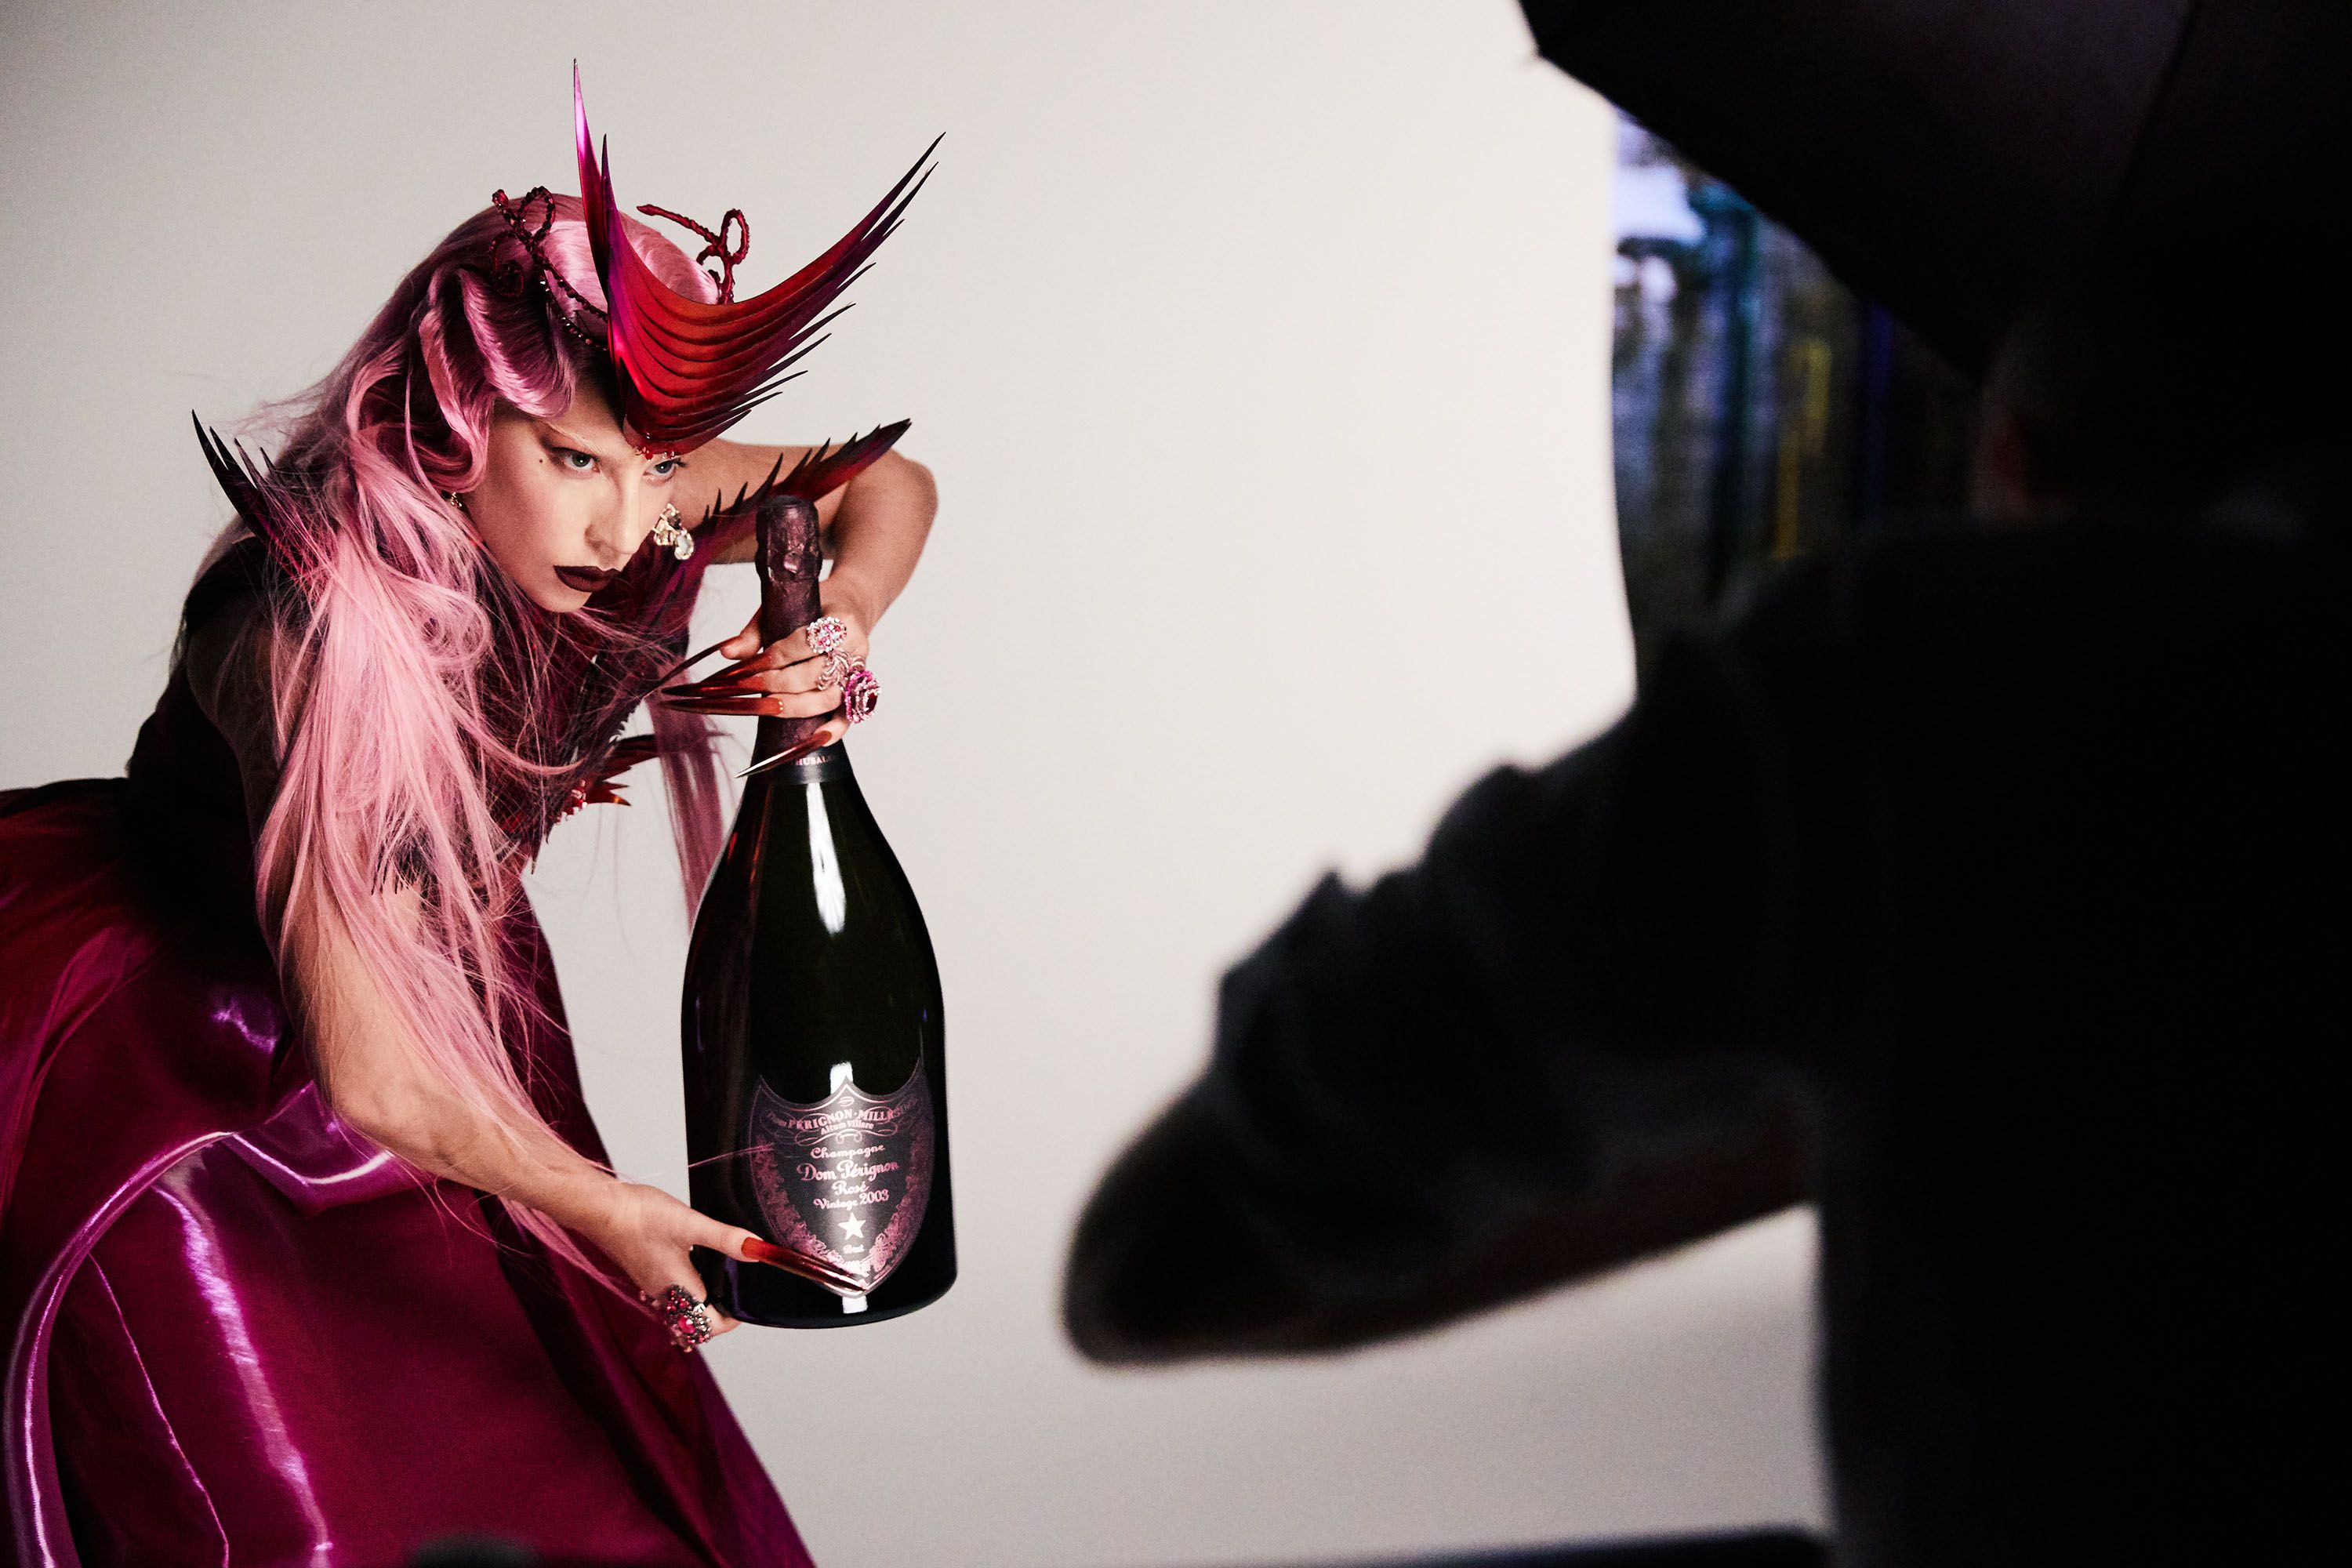 Dom Perignon & Lady Gaga Rose